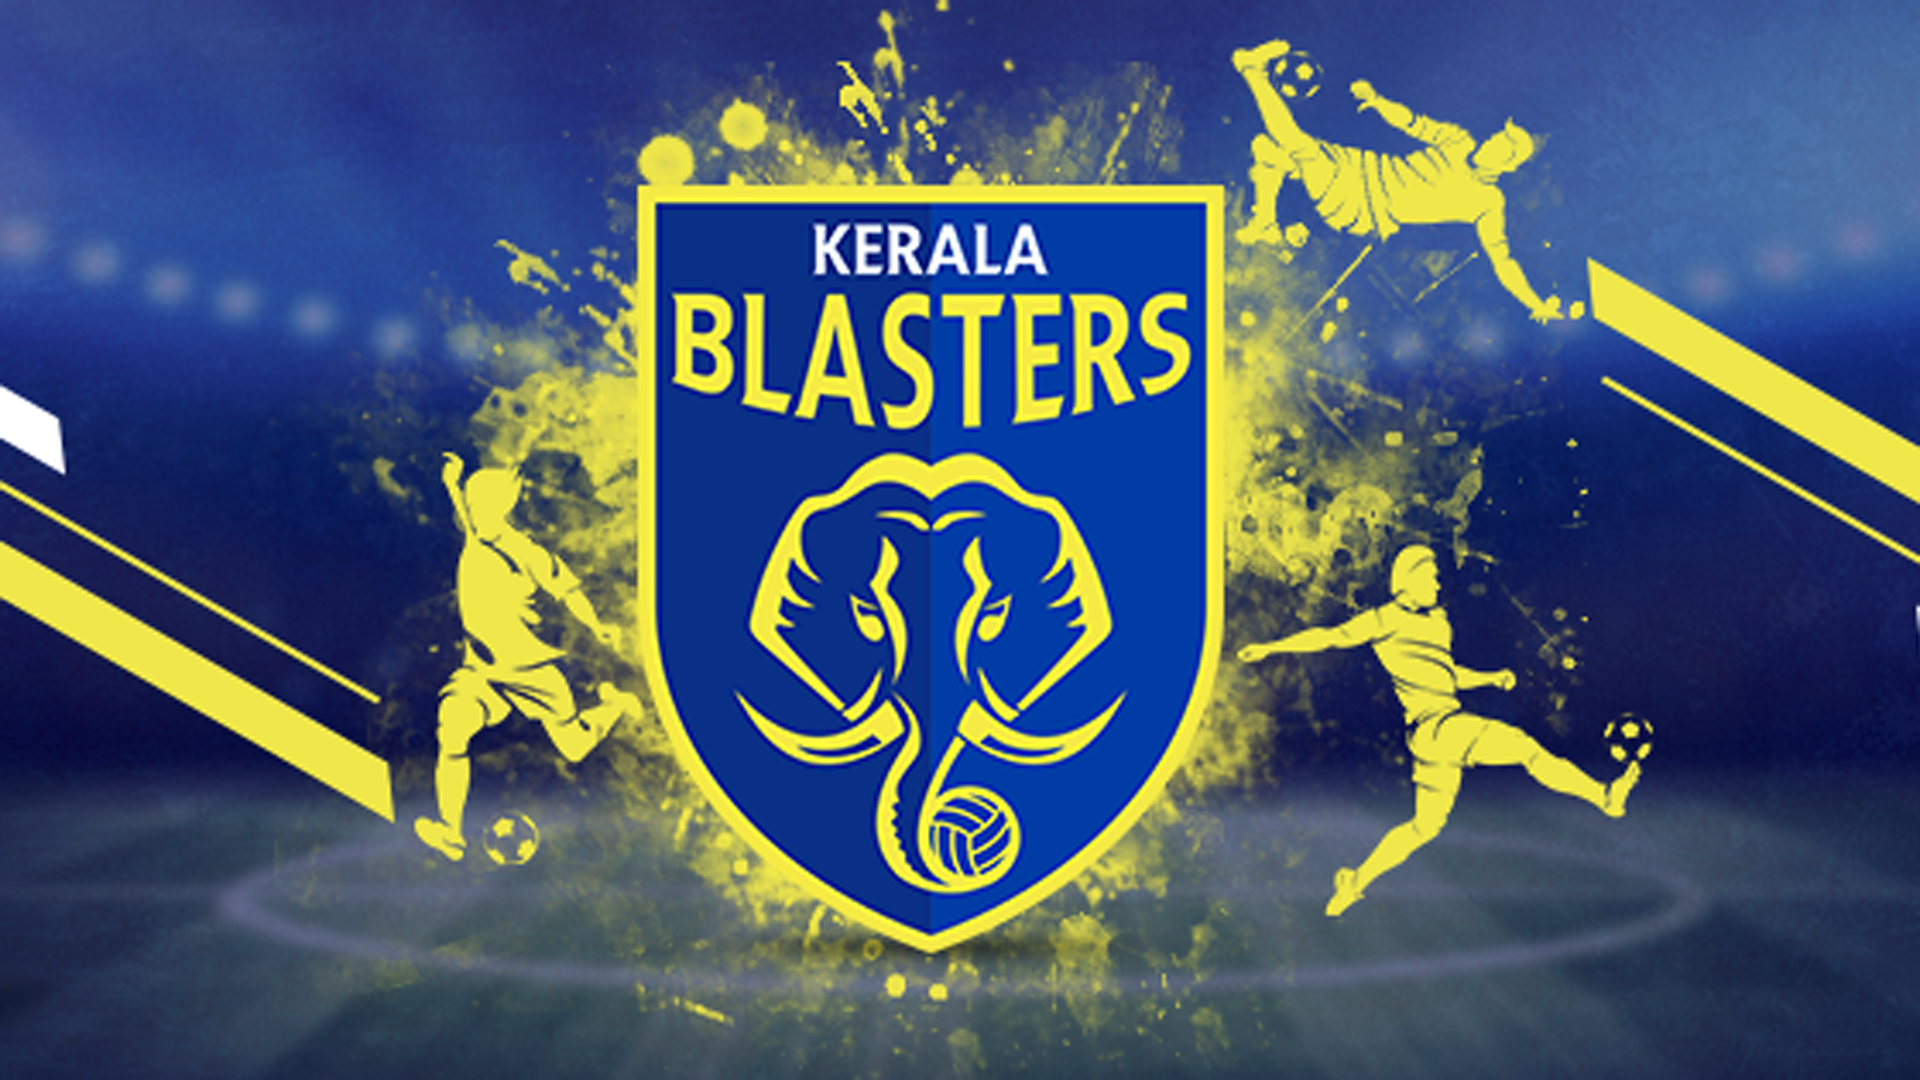 Save Box & Kerala Blasters join hands - The bidding platform becomes  Associate Sponsor | Transfermarkt